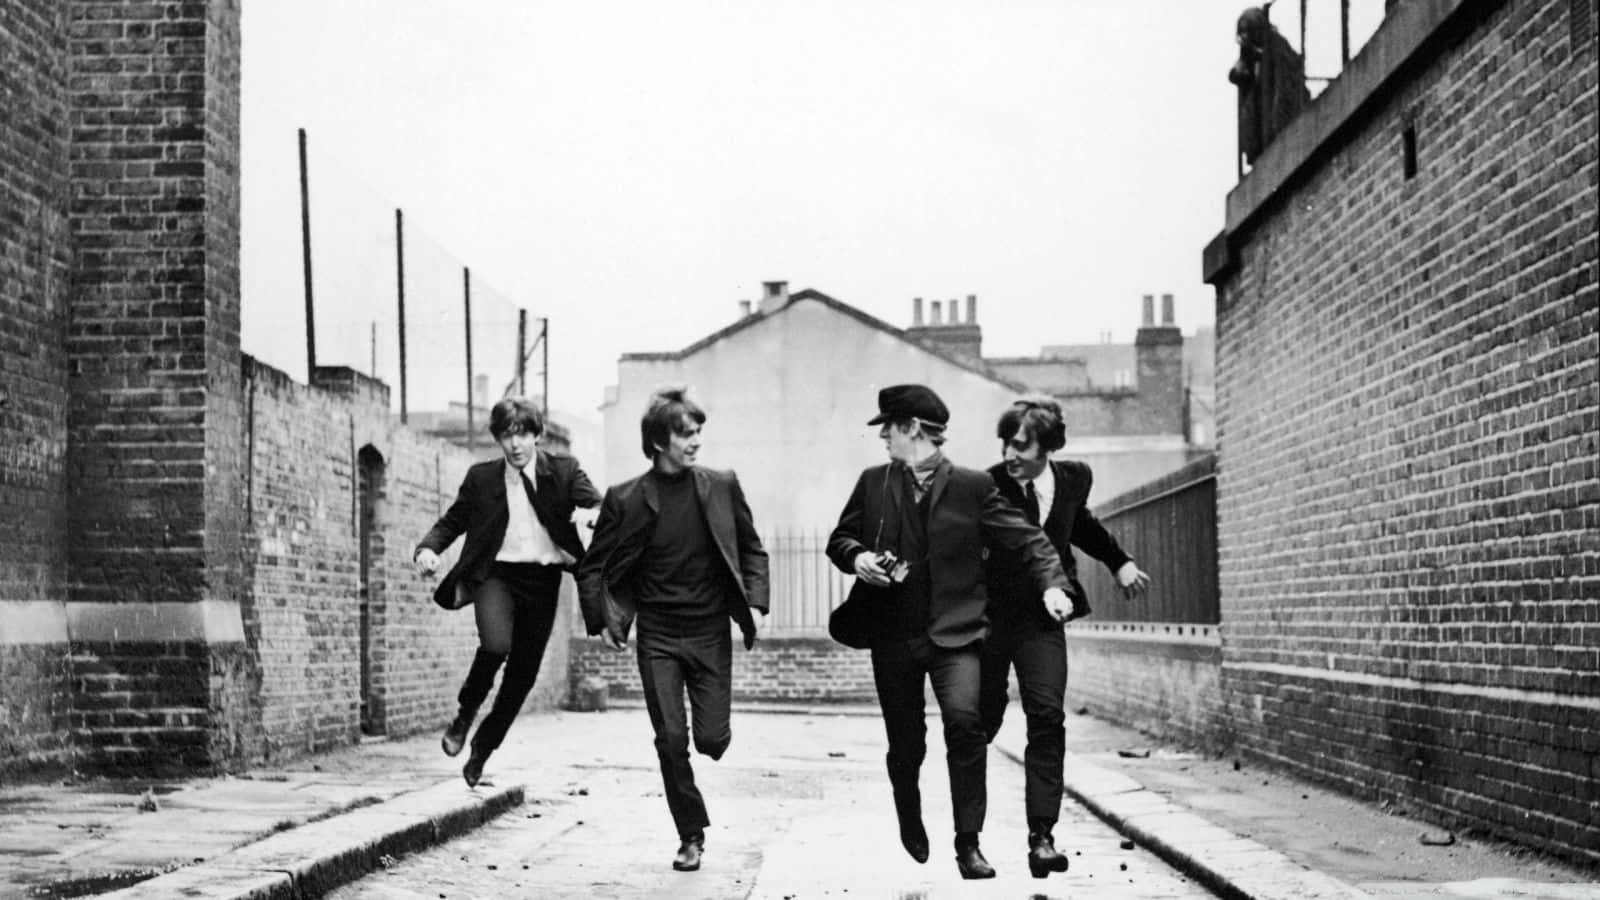 Hintergrundmit Den Beatles